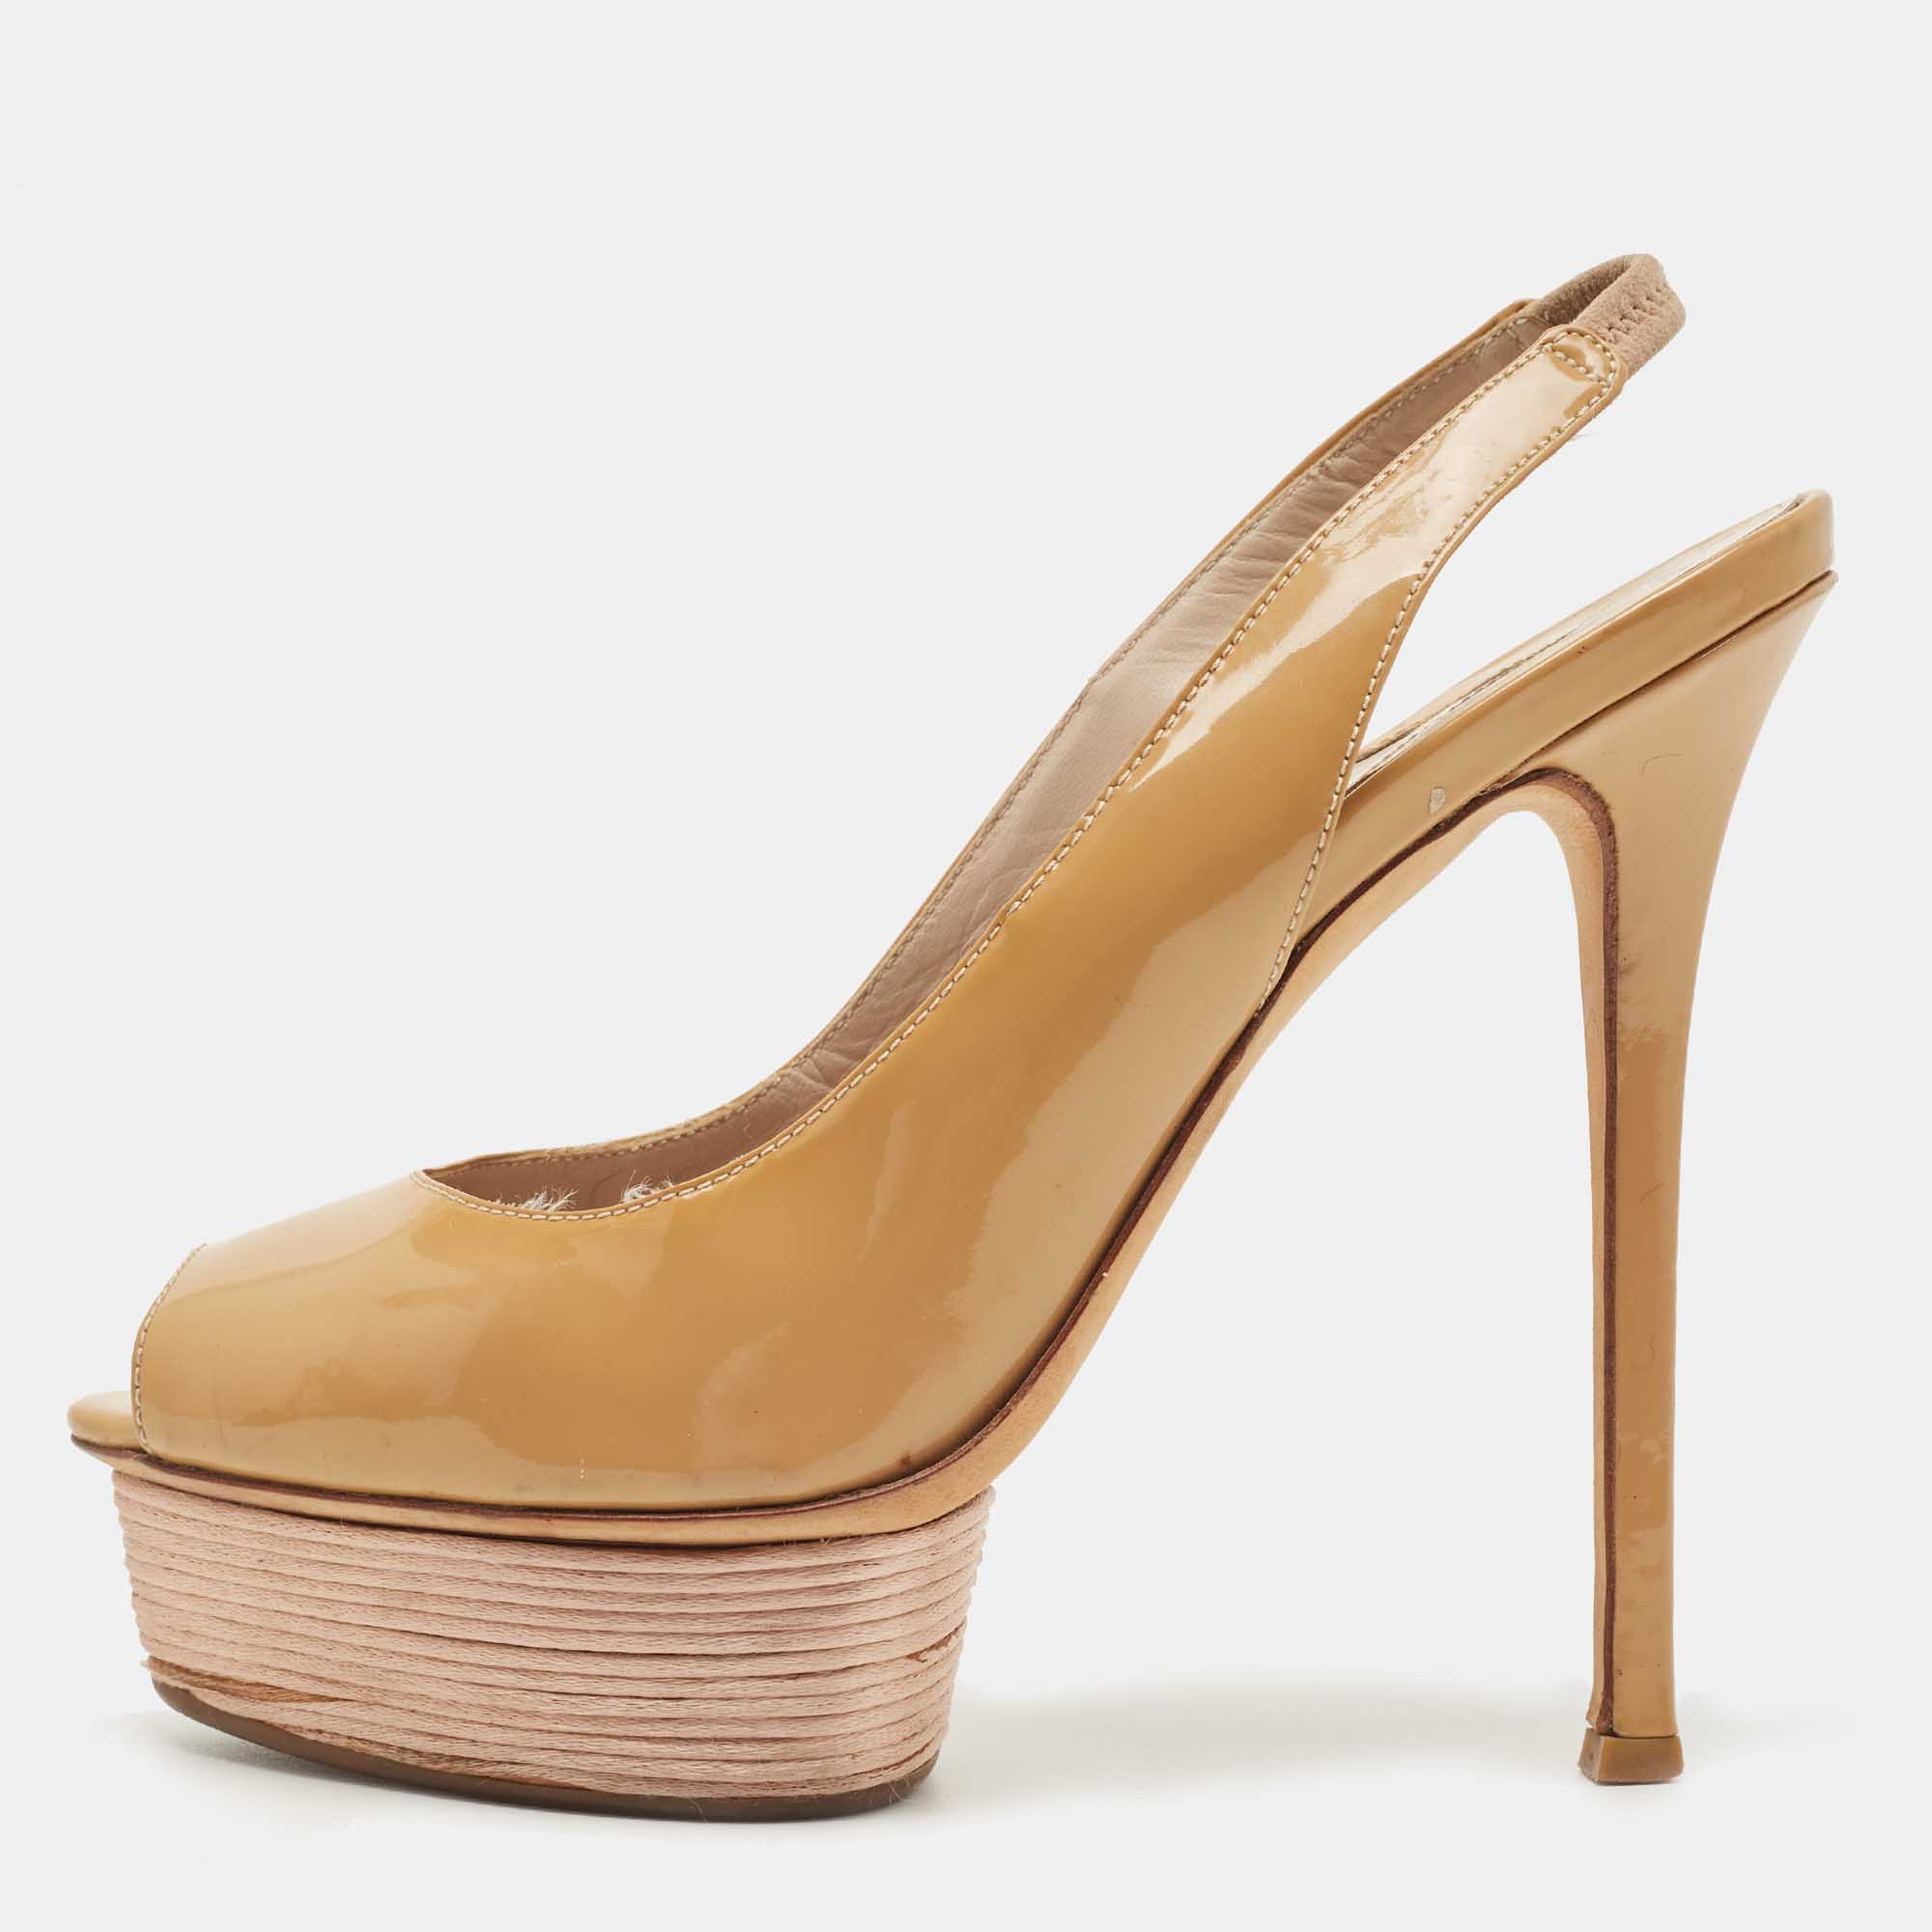 Le Silla Beige Patent Leather Peep Toe Platform Slingback Sandals Size 37